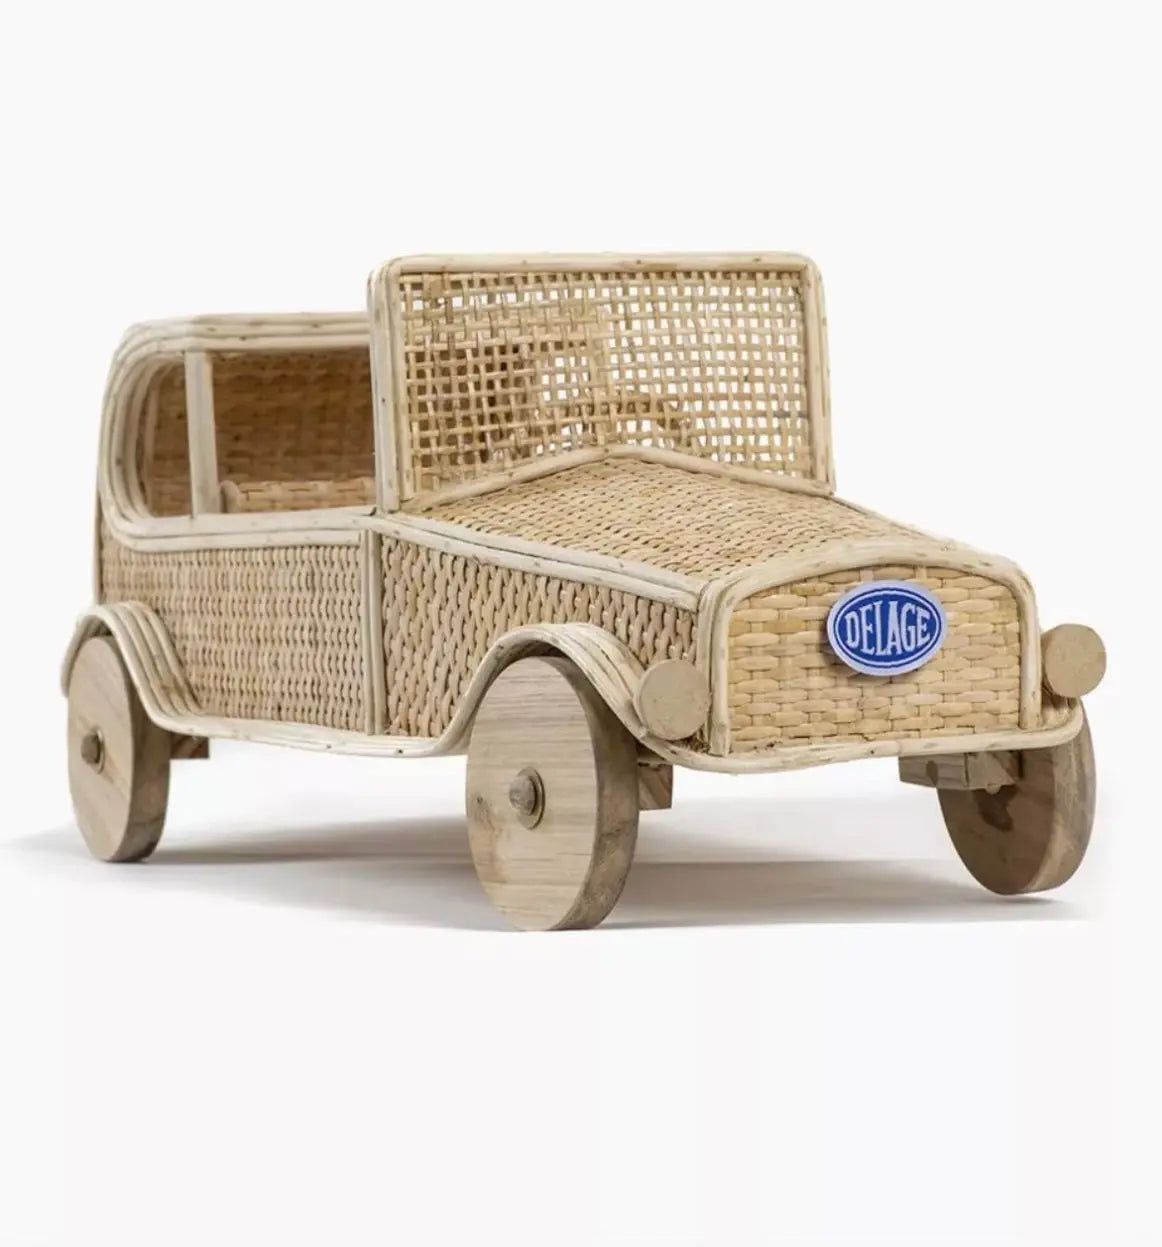 Delage 'Pontianak' Limousine Car, 48cm Toy Car, Collectible Toy  Minikane   